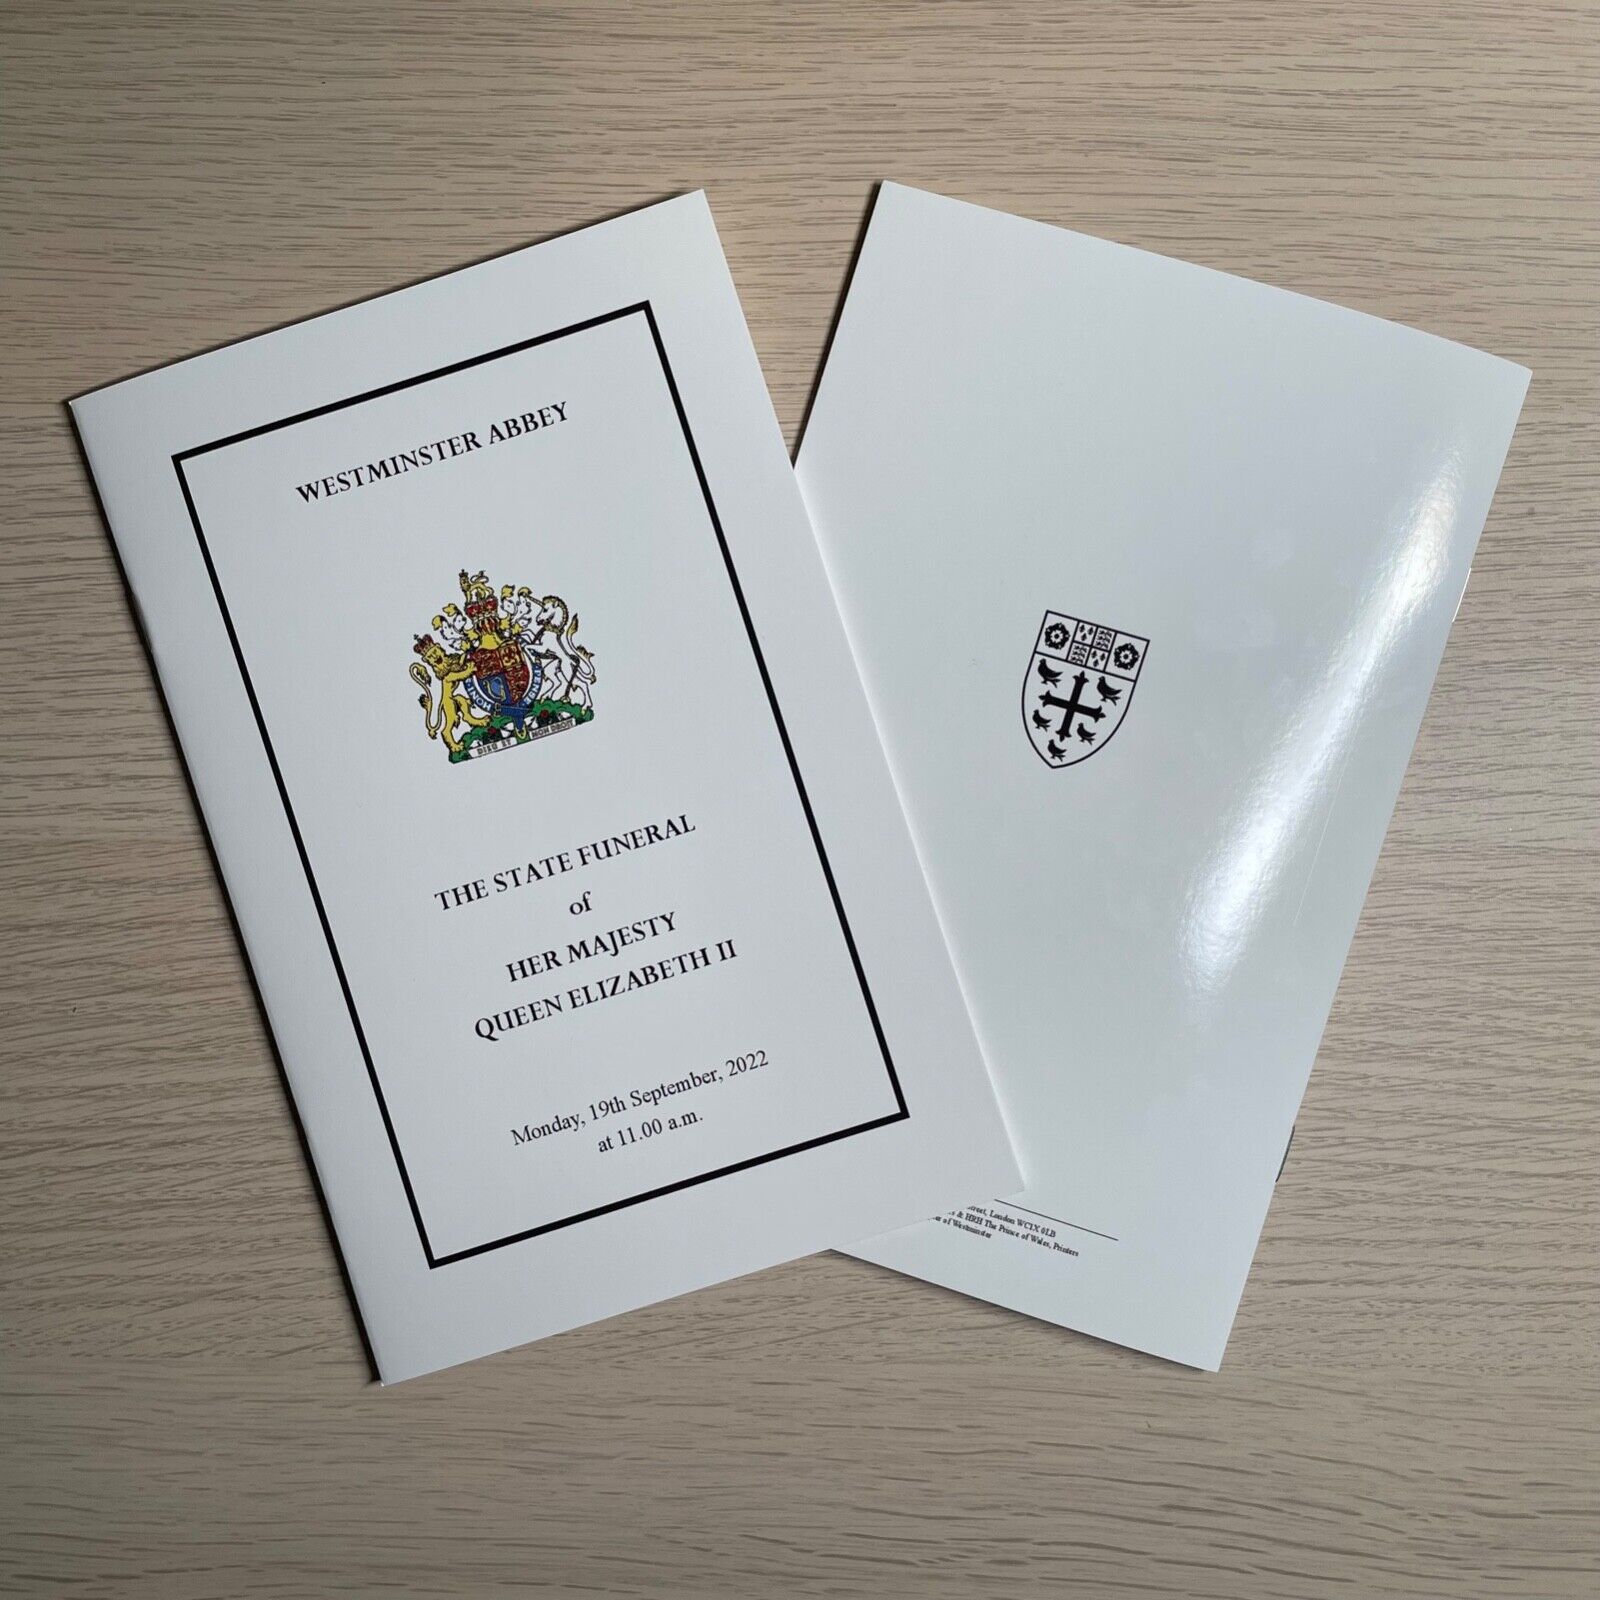 Official Queen Elizabeth II Funeral Order of Service 2022 Booklet